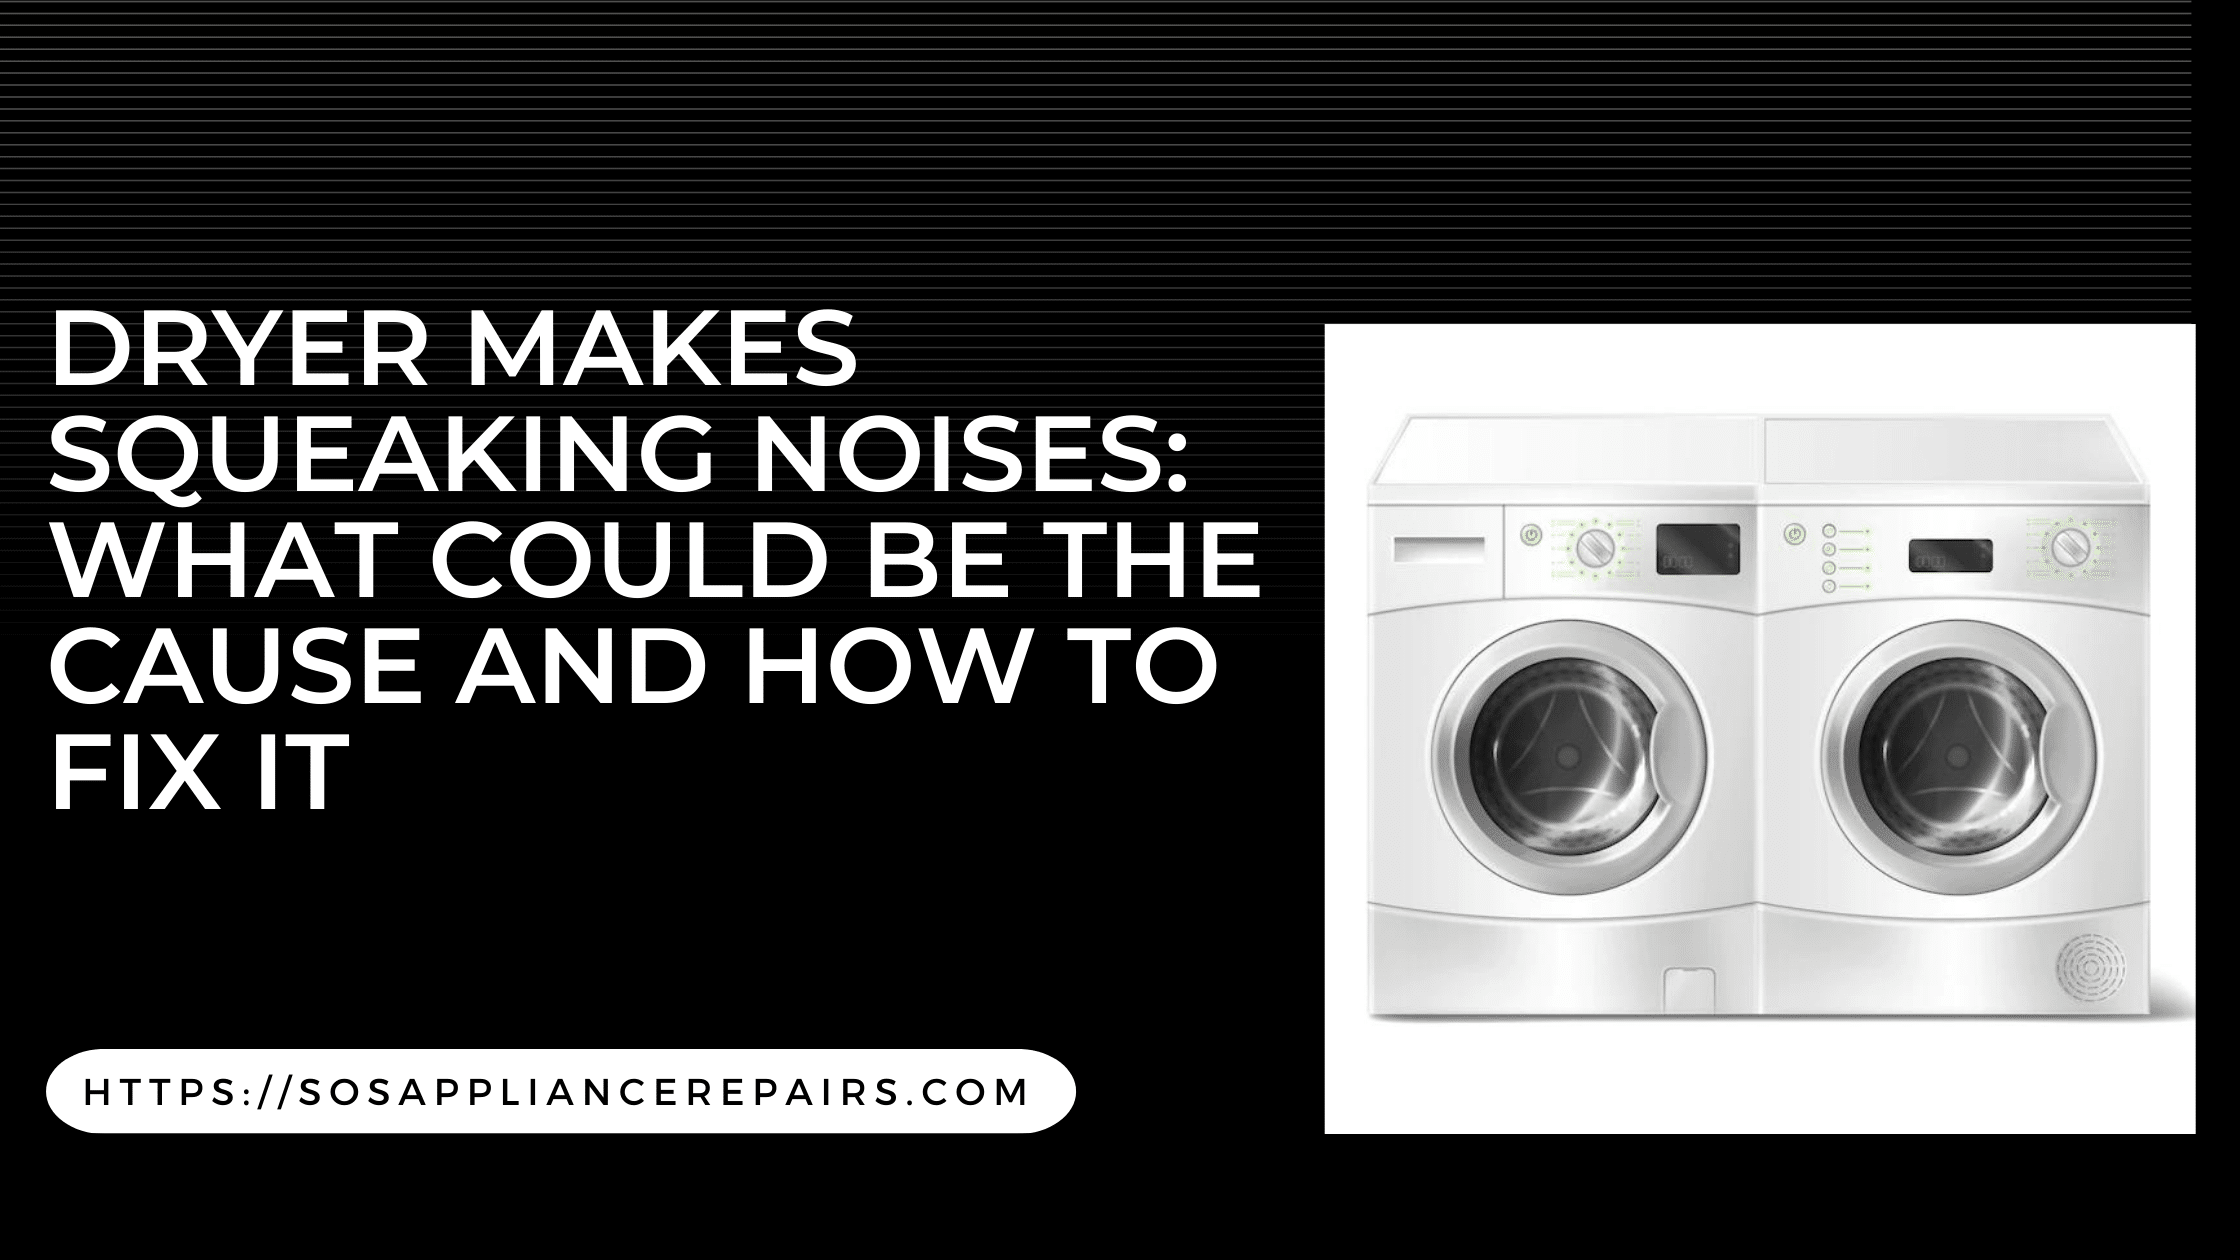 Dryer makes squeaking noises